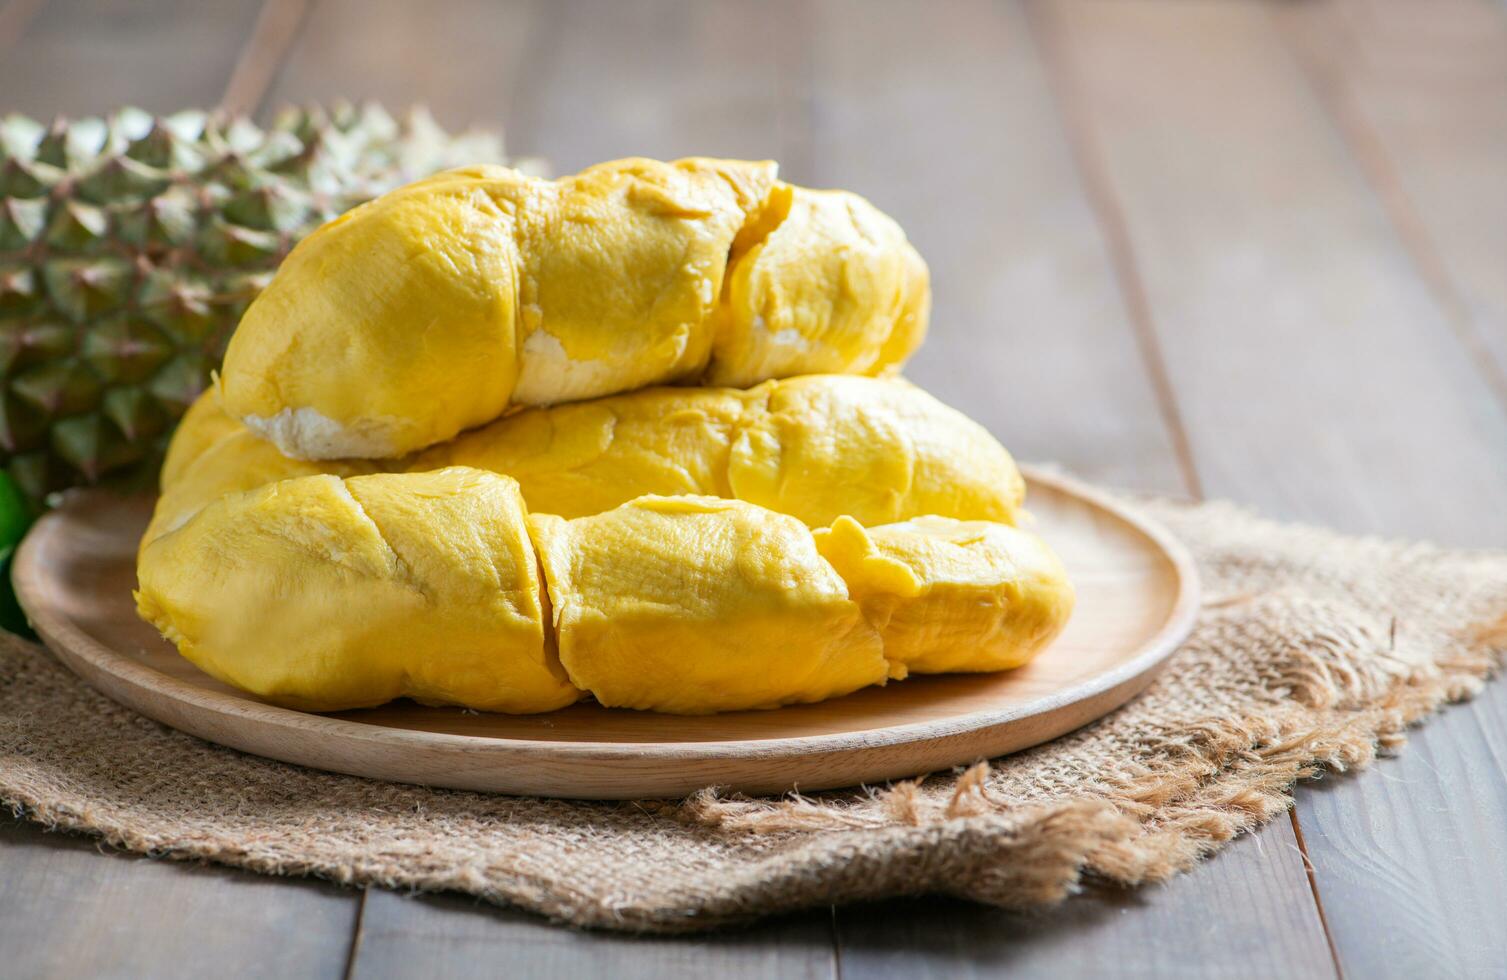 chanie kai durian of durio zibthinus murray Aan hout bord, koning van fruit van Thailand foto